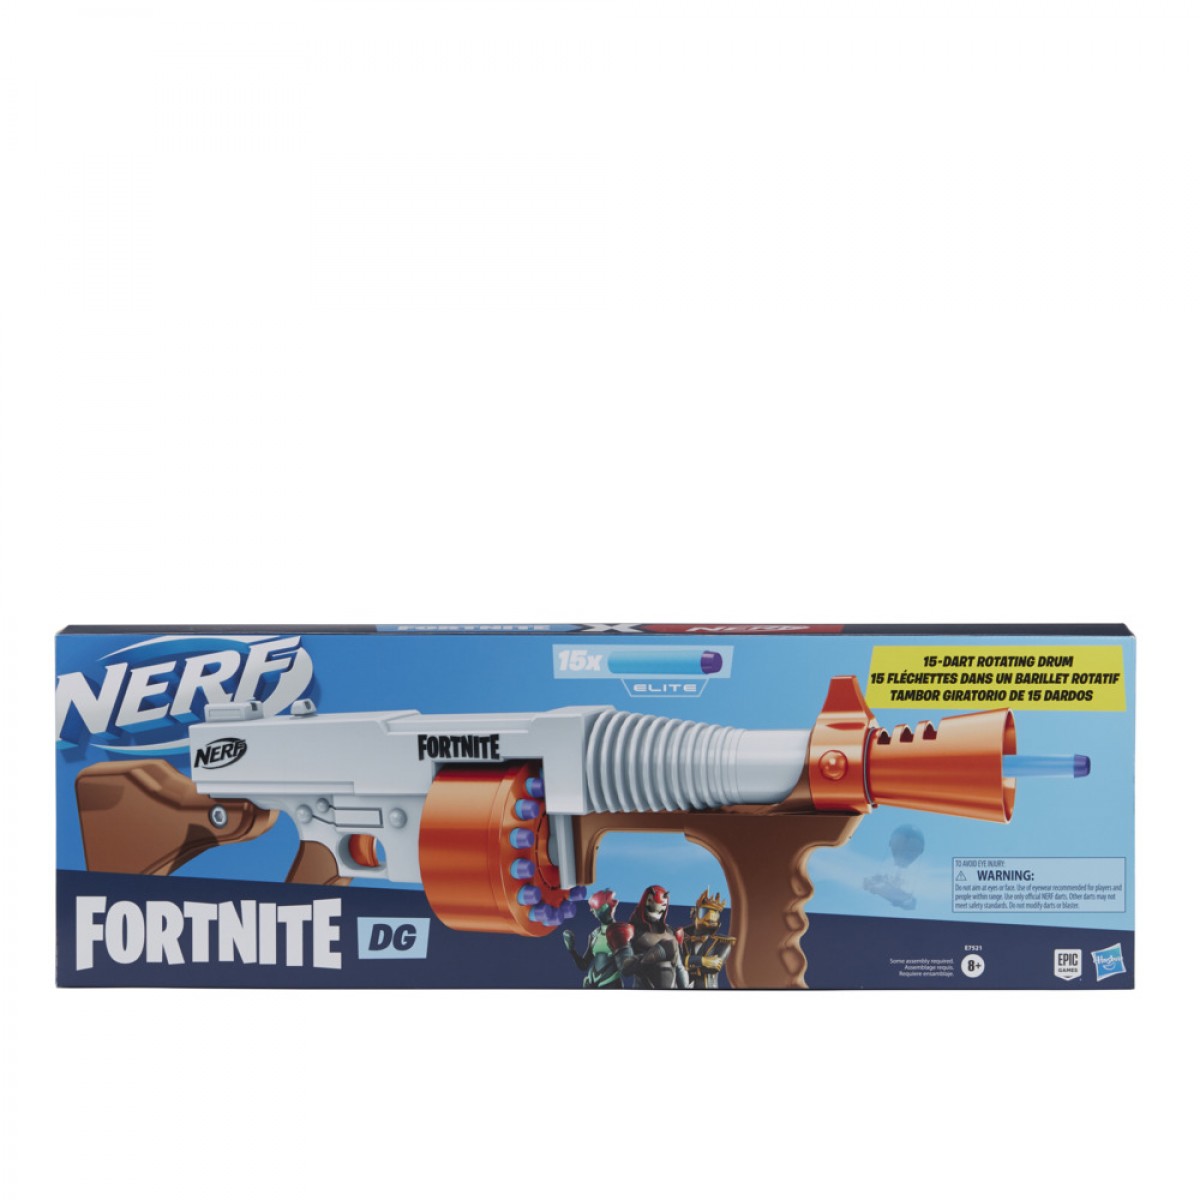 Nerf Fortnite Dg Dart Blaster, 15-Dart Rotating Drum, Pump Action, 15 Official Nerf Darts,Inspired By Blaster Used In Fortnite Video Game, 8Yrs+